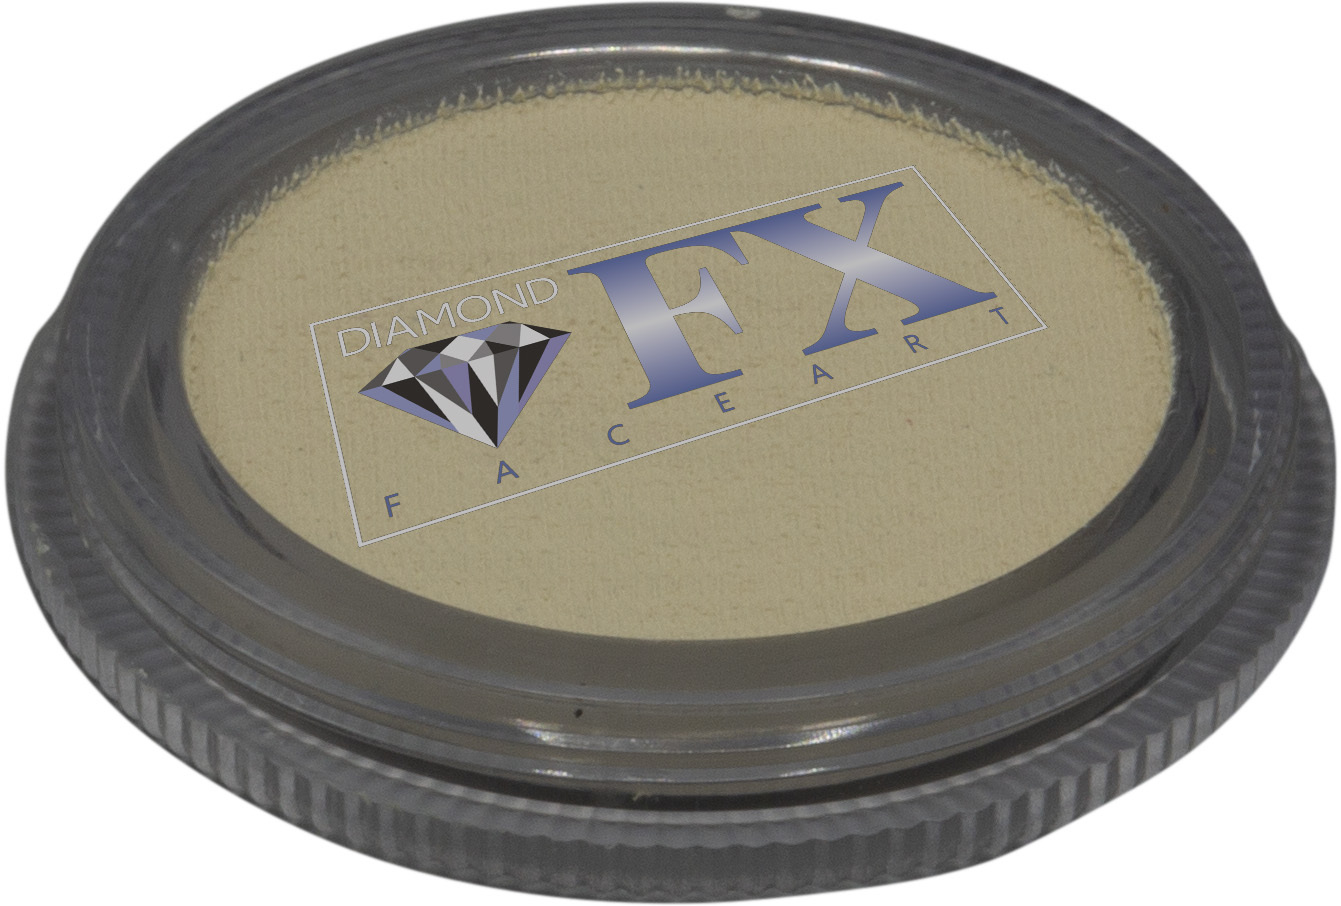 Diamond FX White Neon 30g (Cosmetic) - Small Image